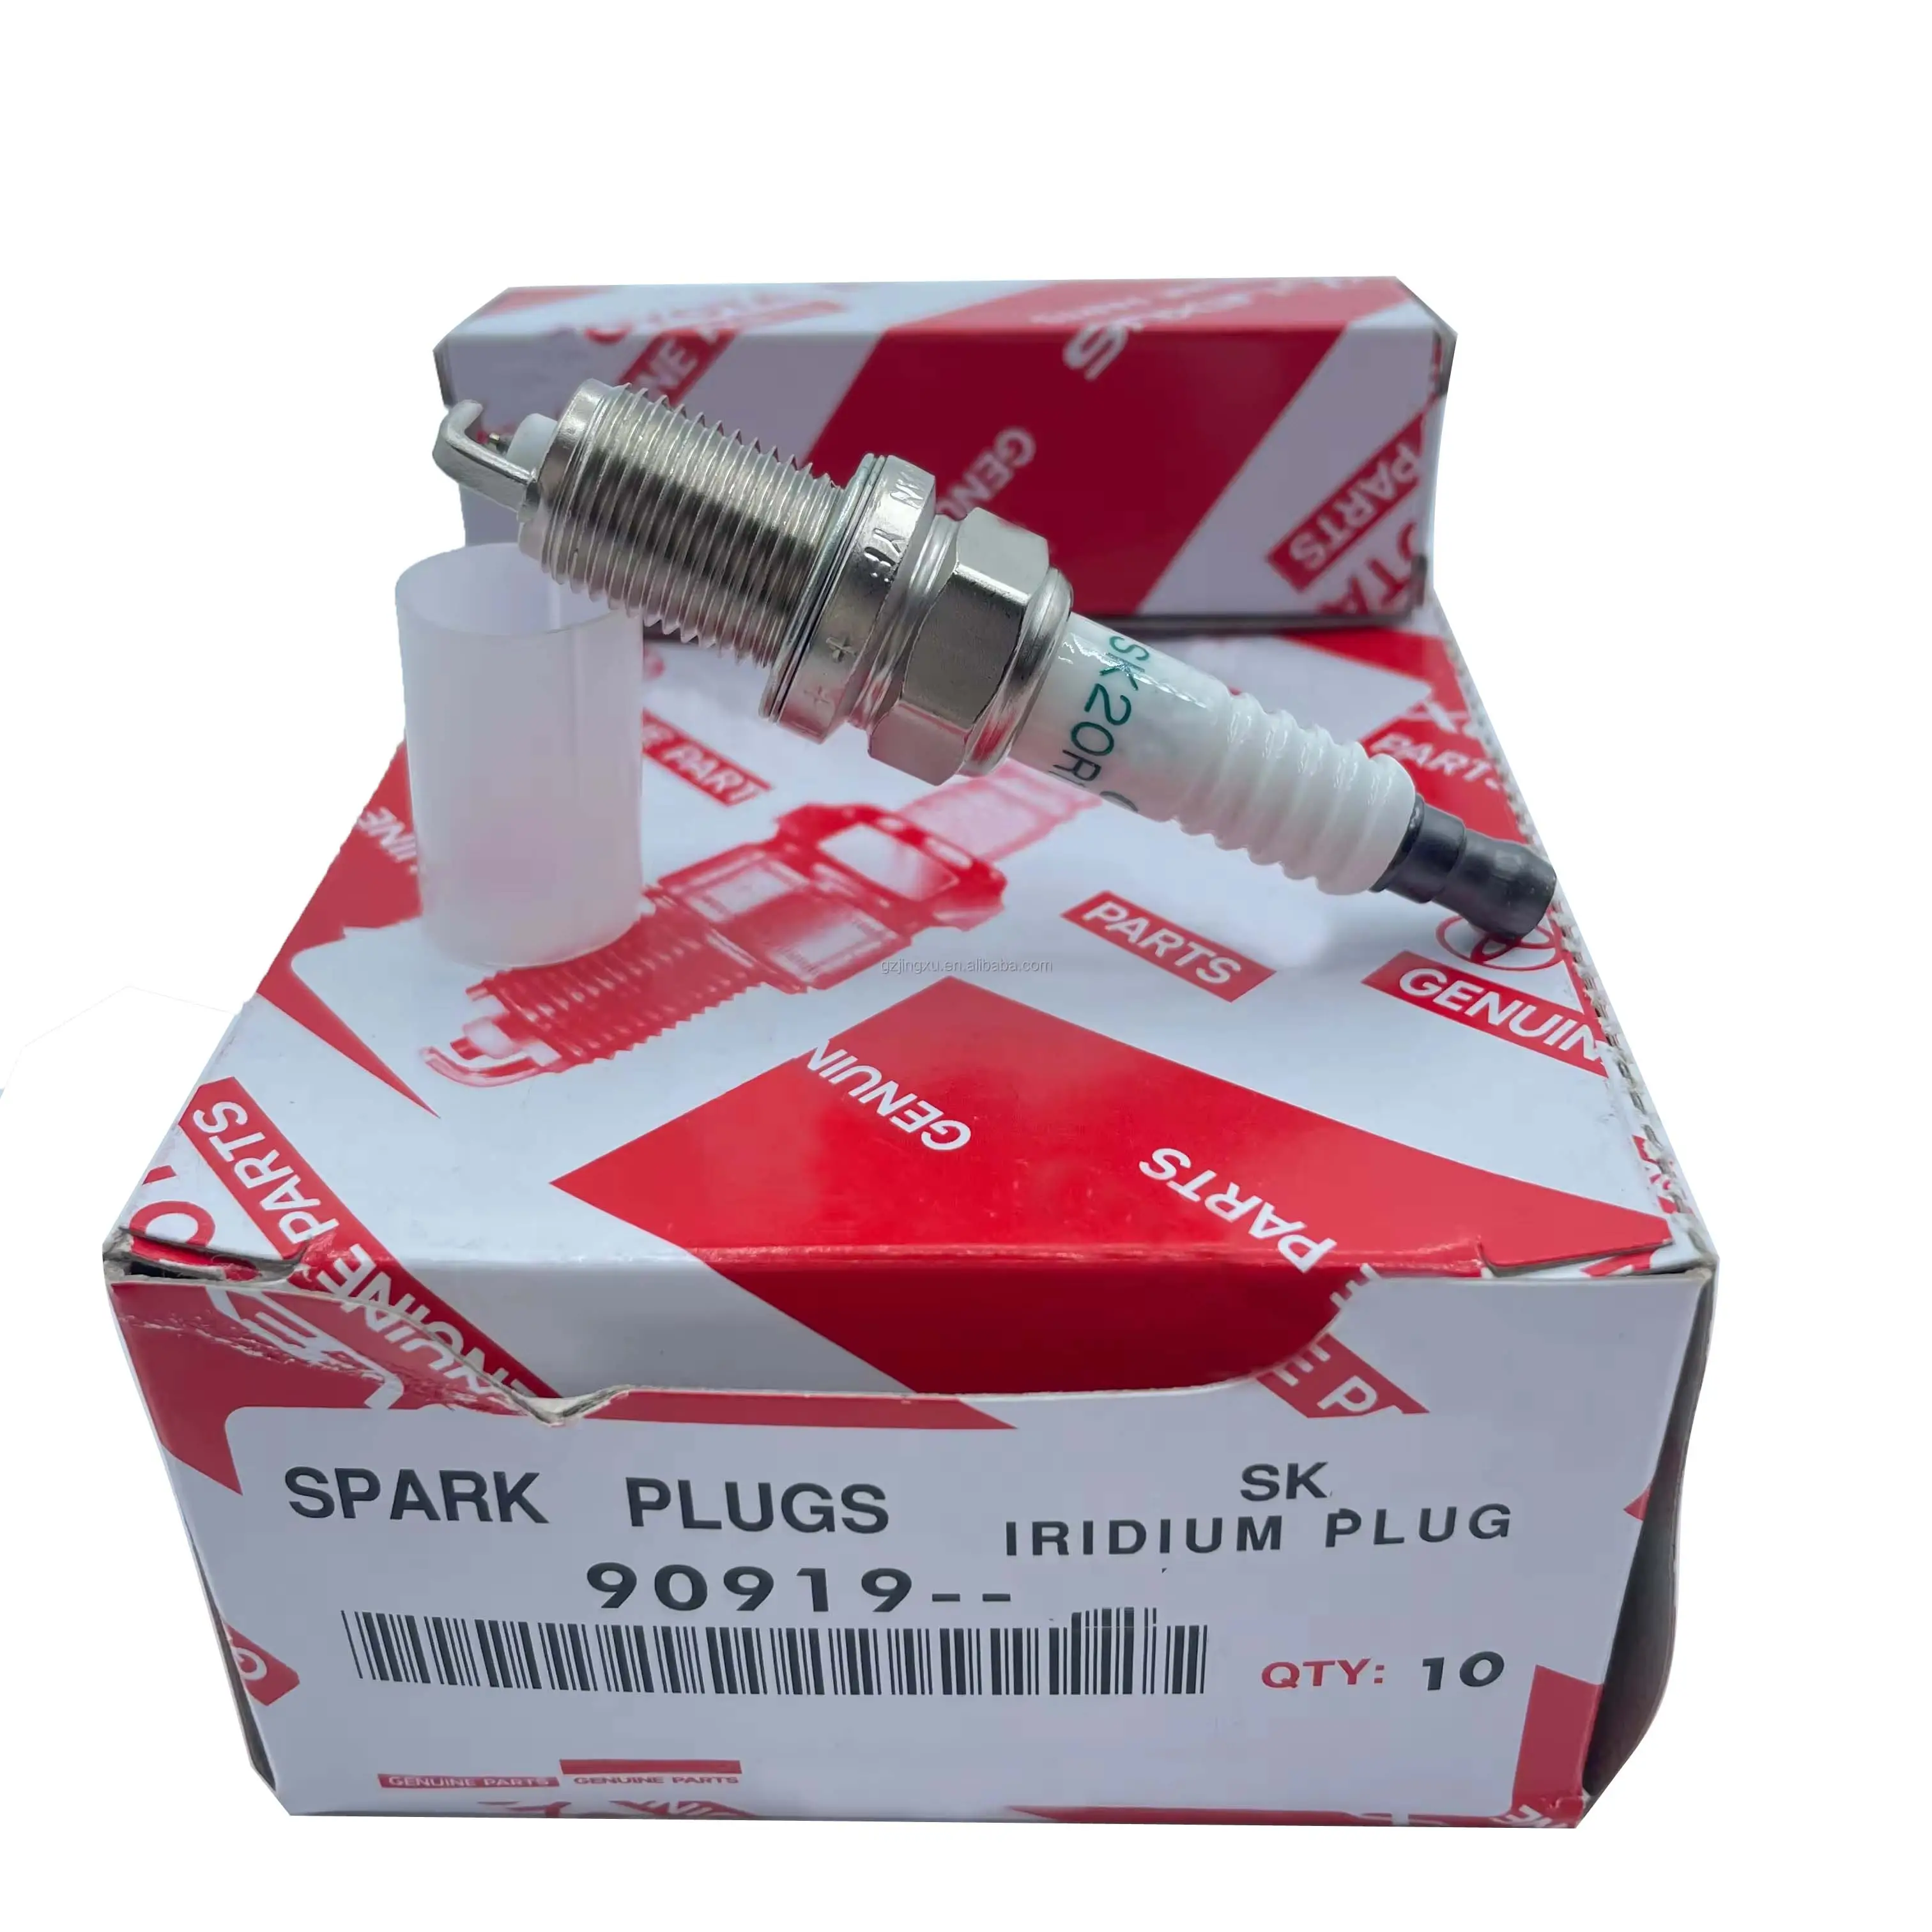 Auto Parts Automotive engine systems Iridium Spark Plugs for Toyota Japan Car K16TR11 Car Spark Plugs 90919-01192 Spark Plugs